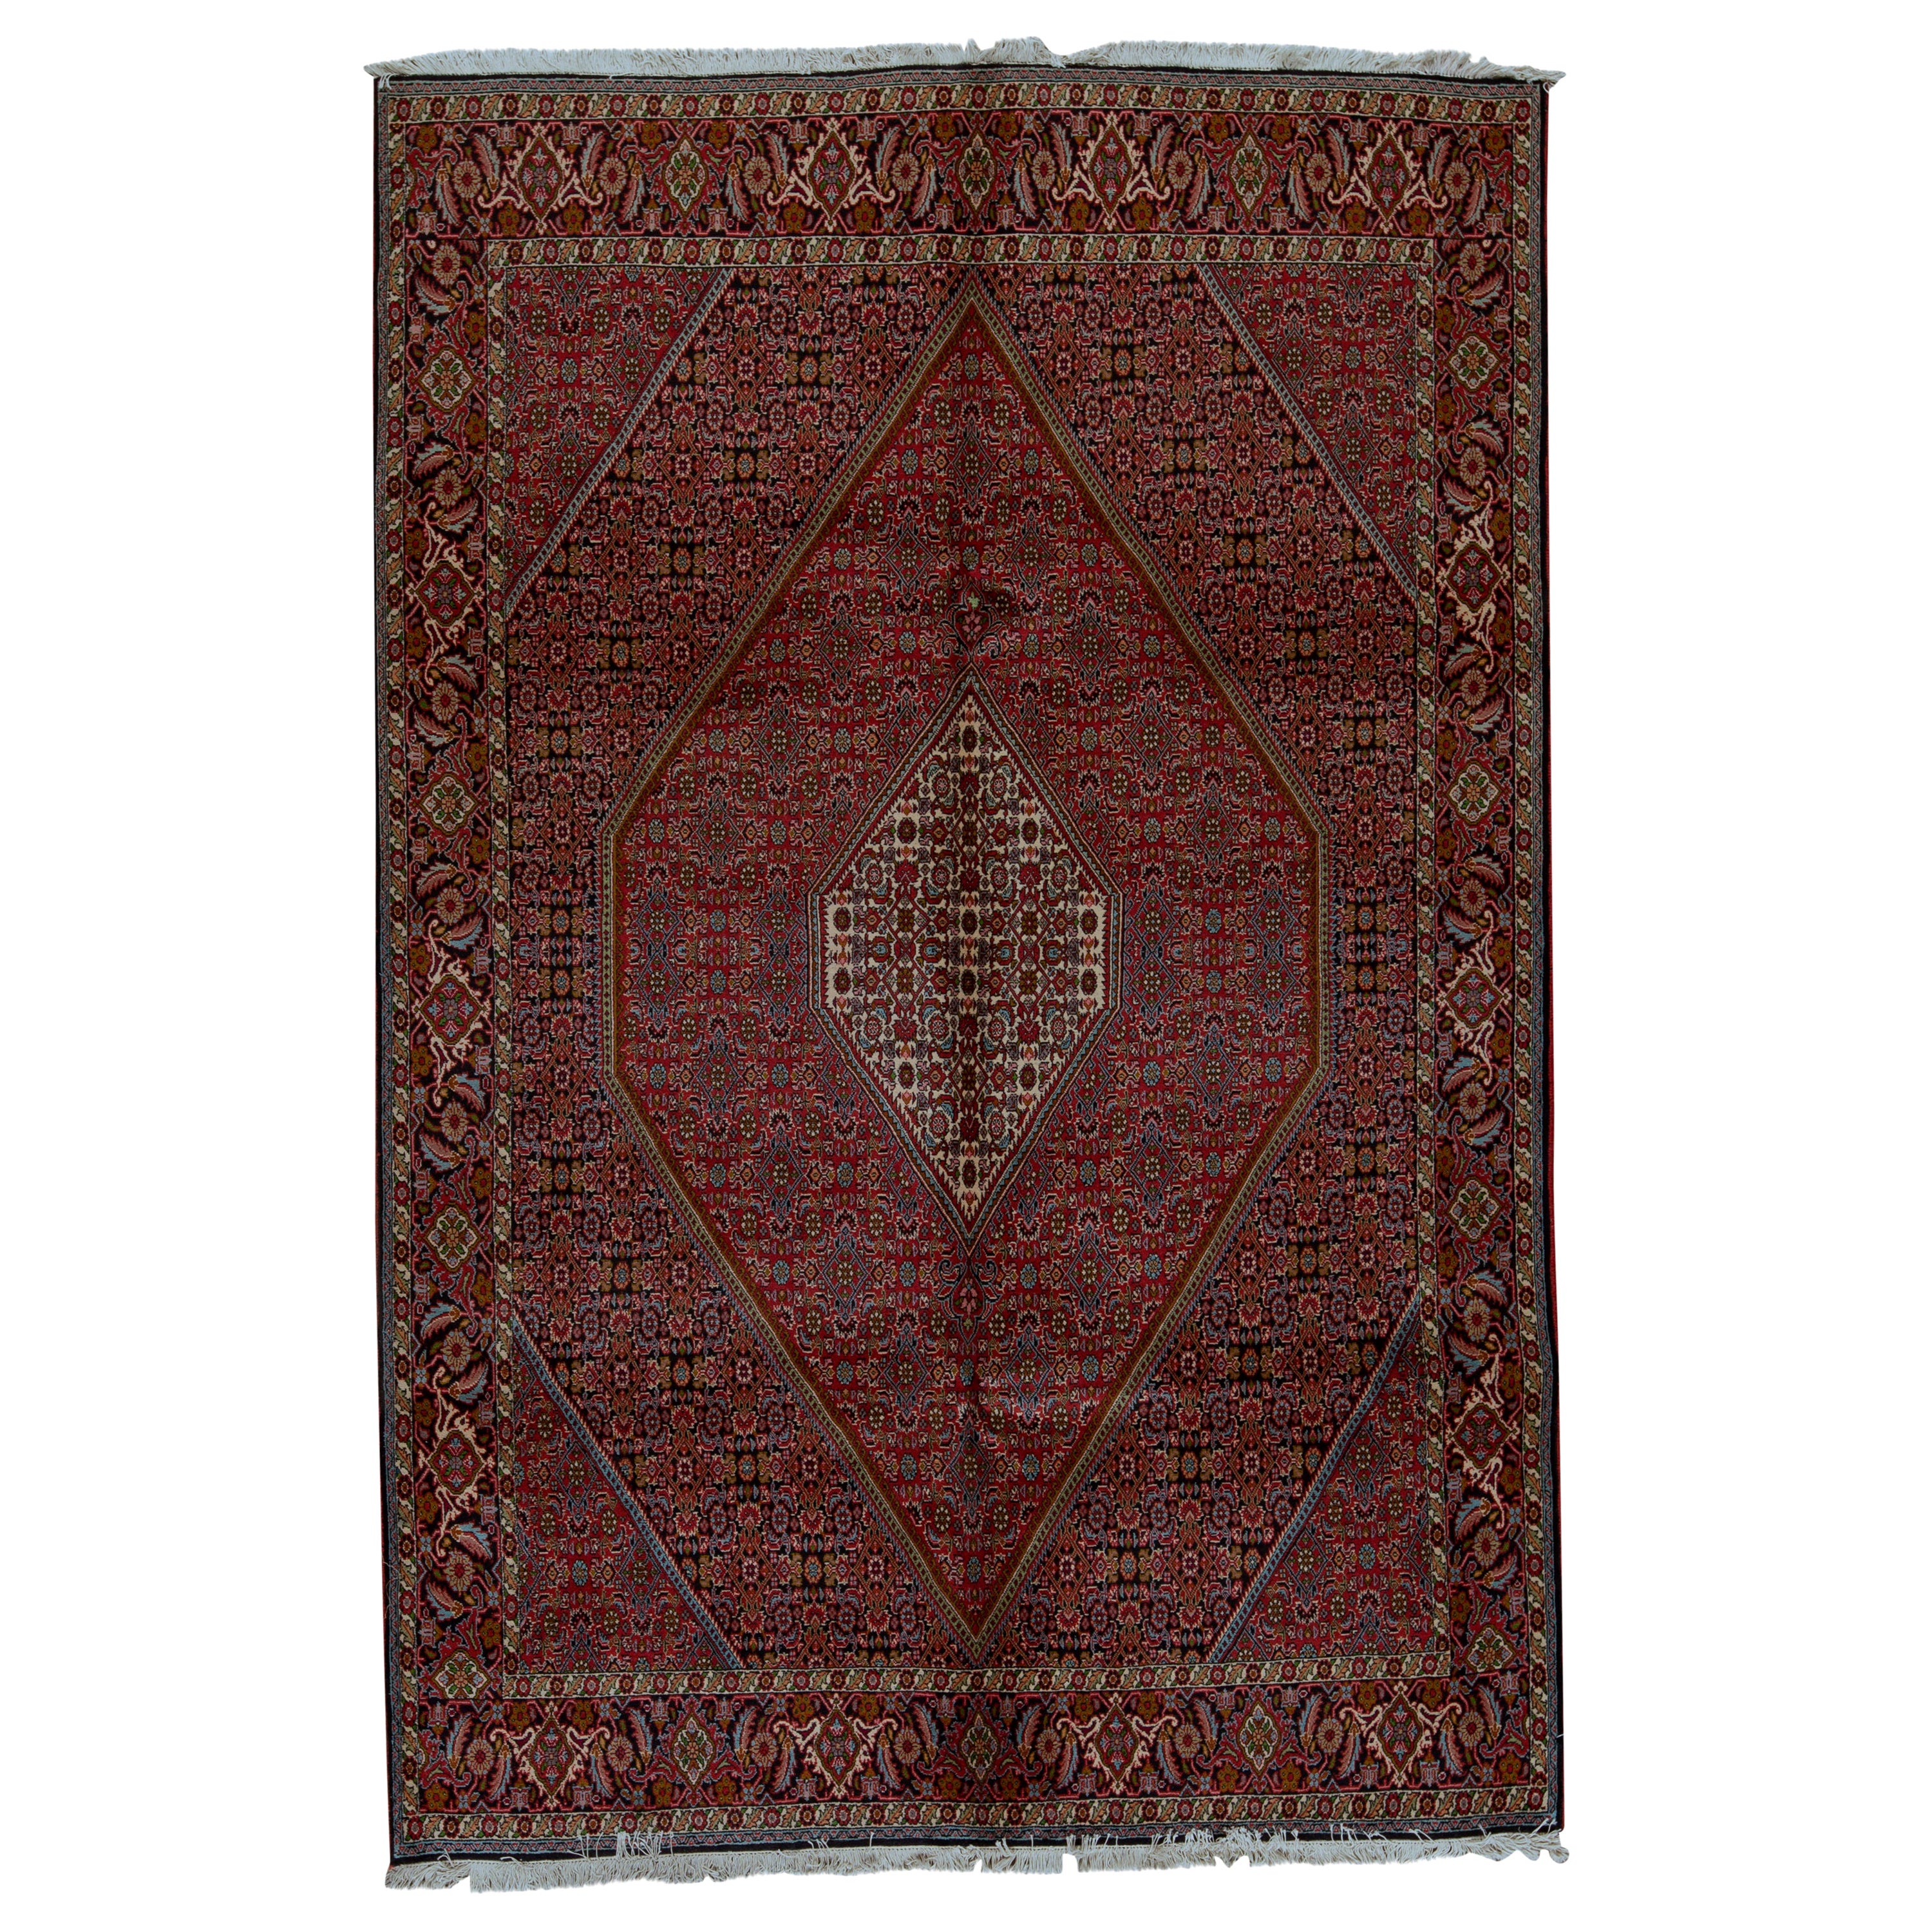   Antique Persian Fine Traditional Handwoven Luxury Wool Rust / Navy Rug